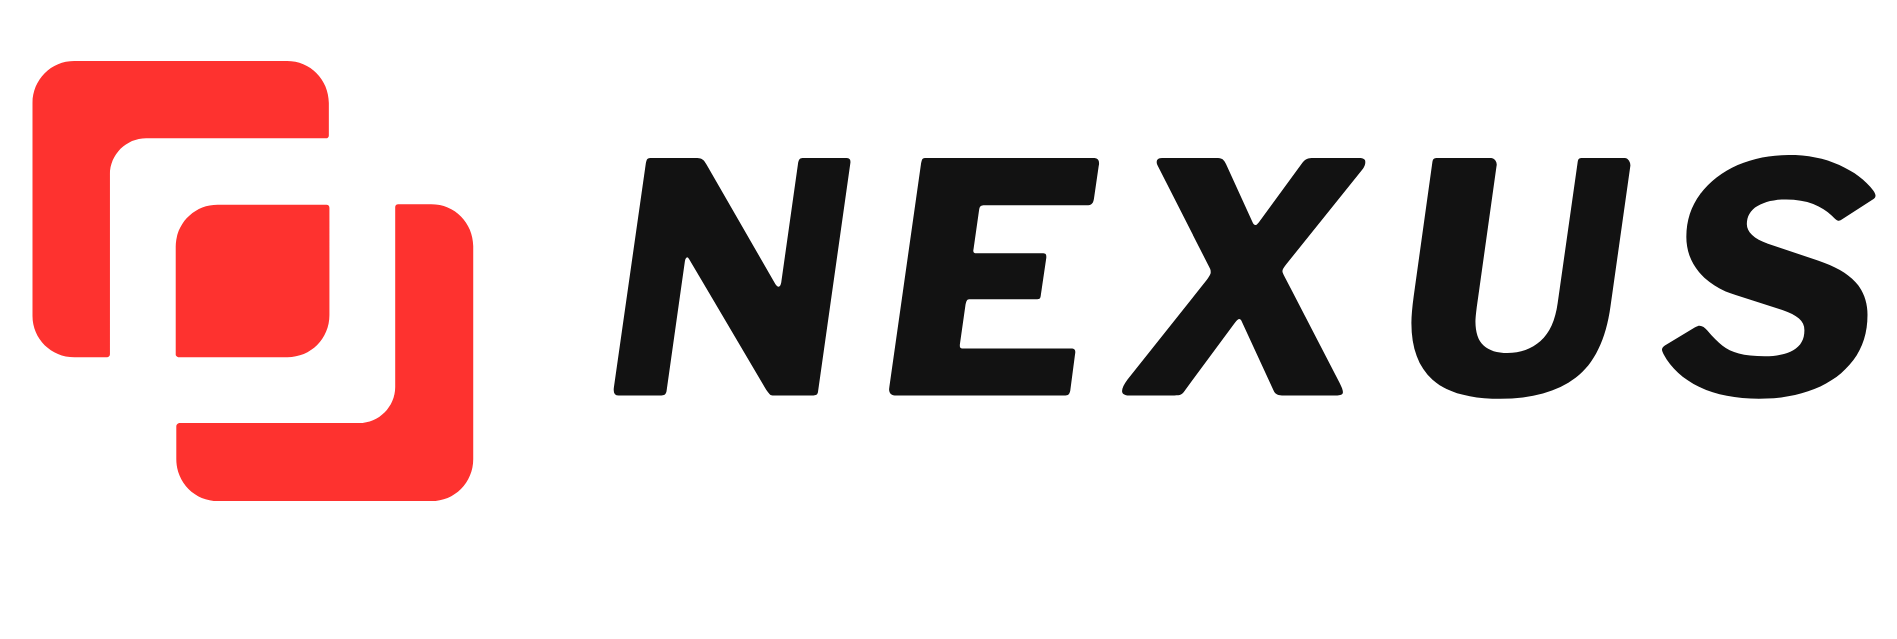 Nexus - Unity Toolkit logo